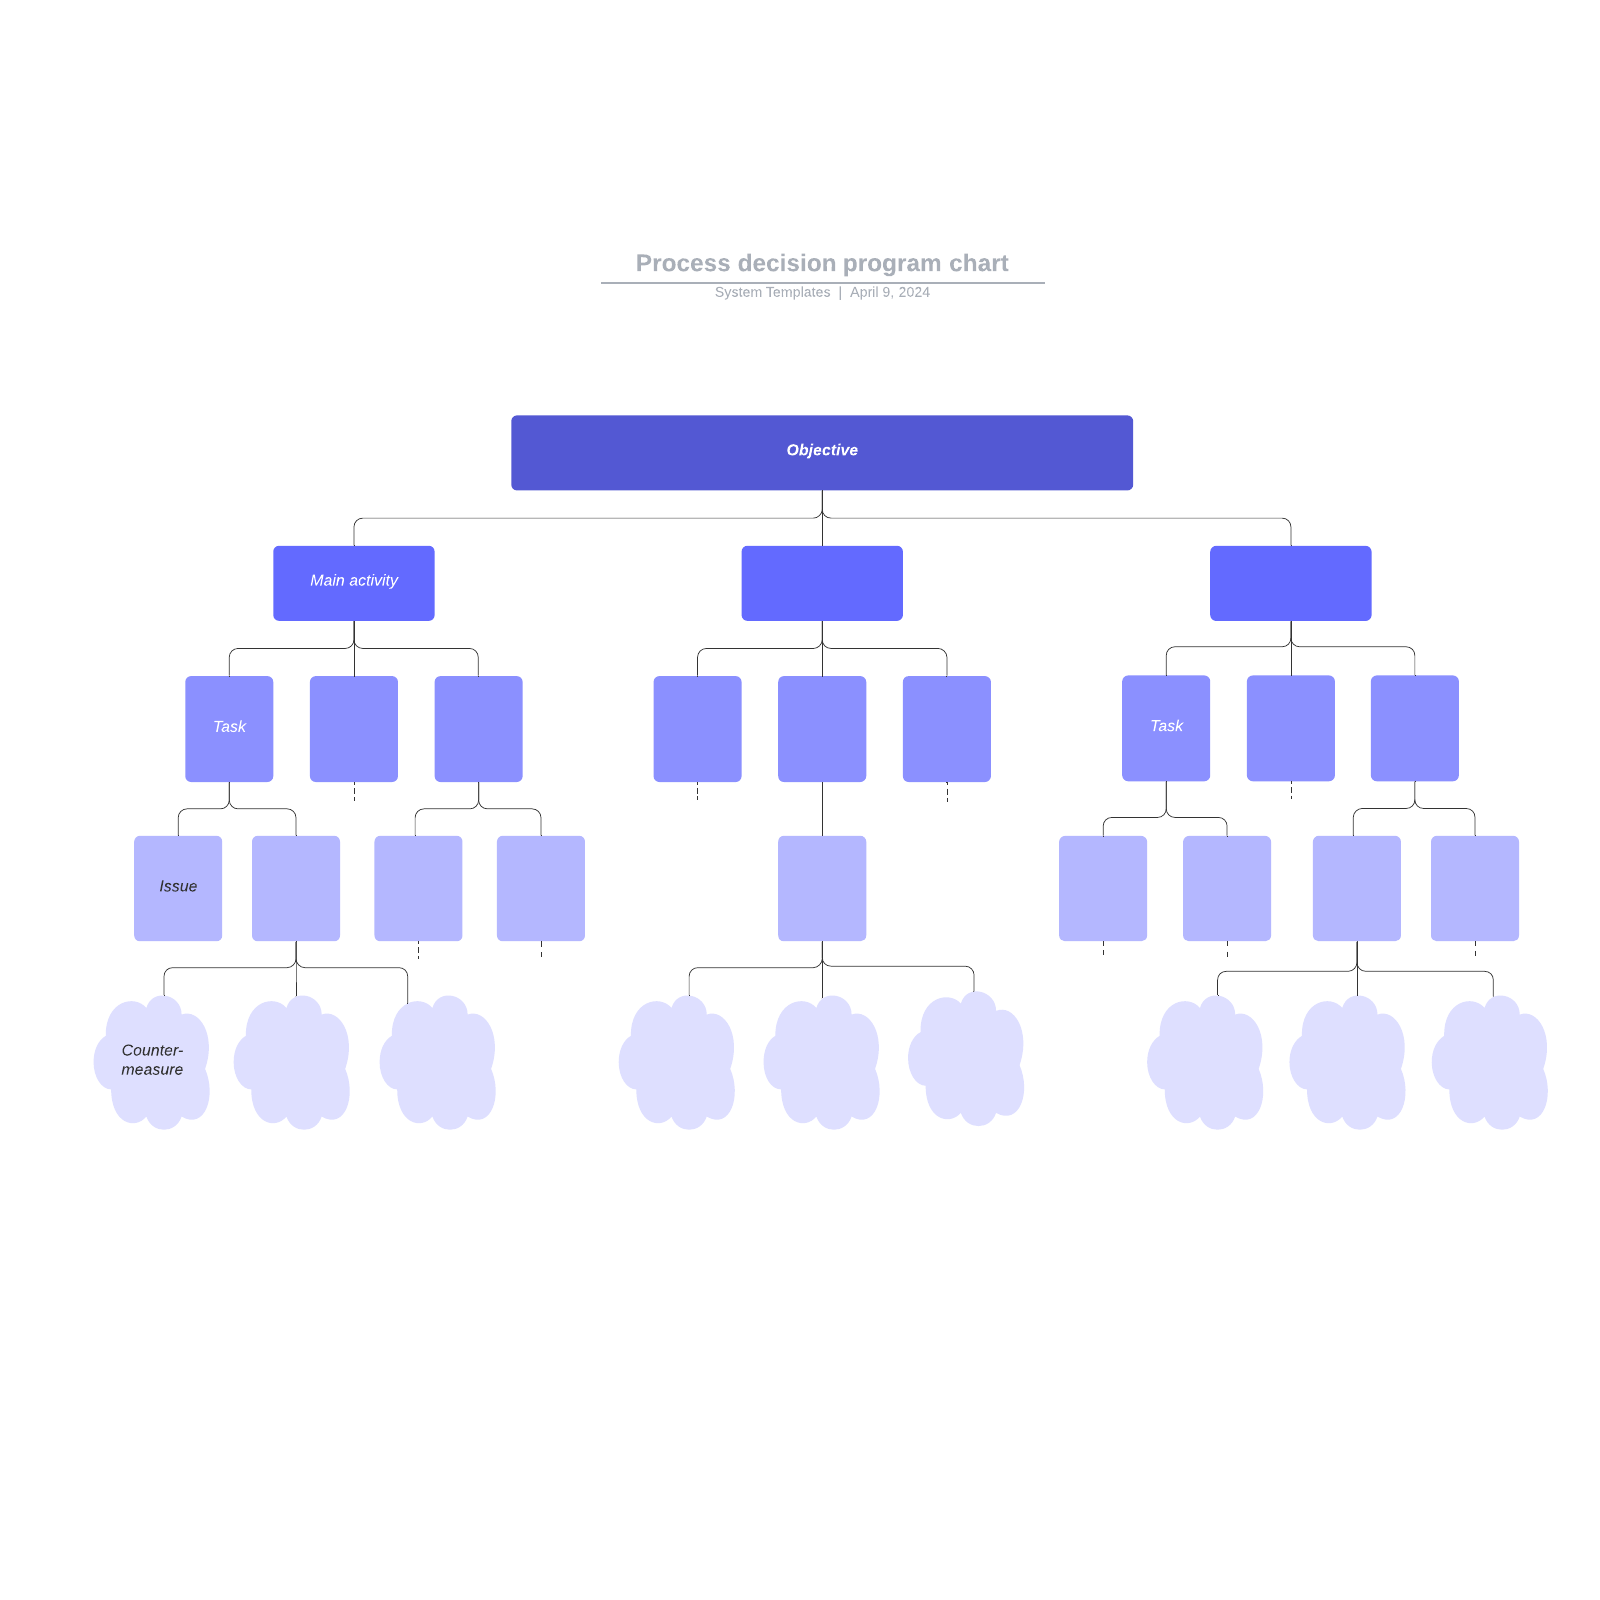 Process decision program chart example